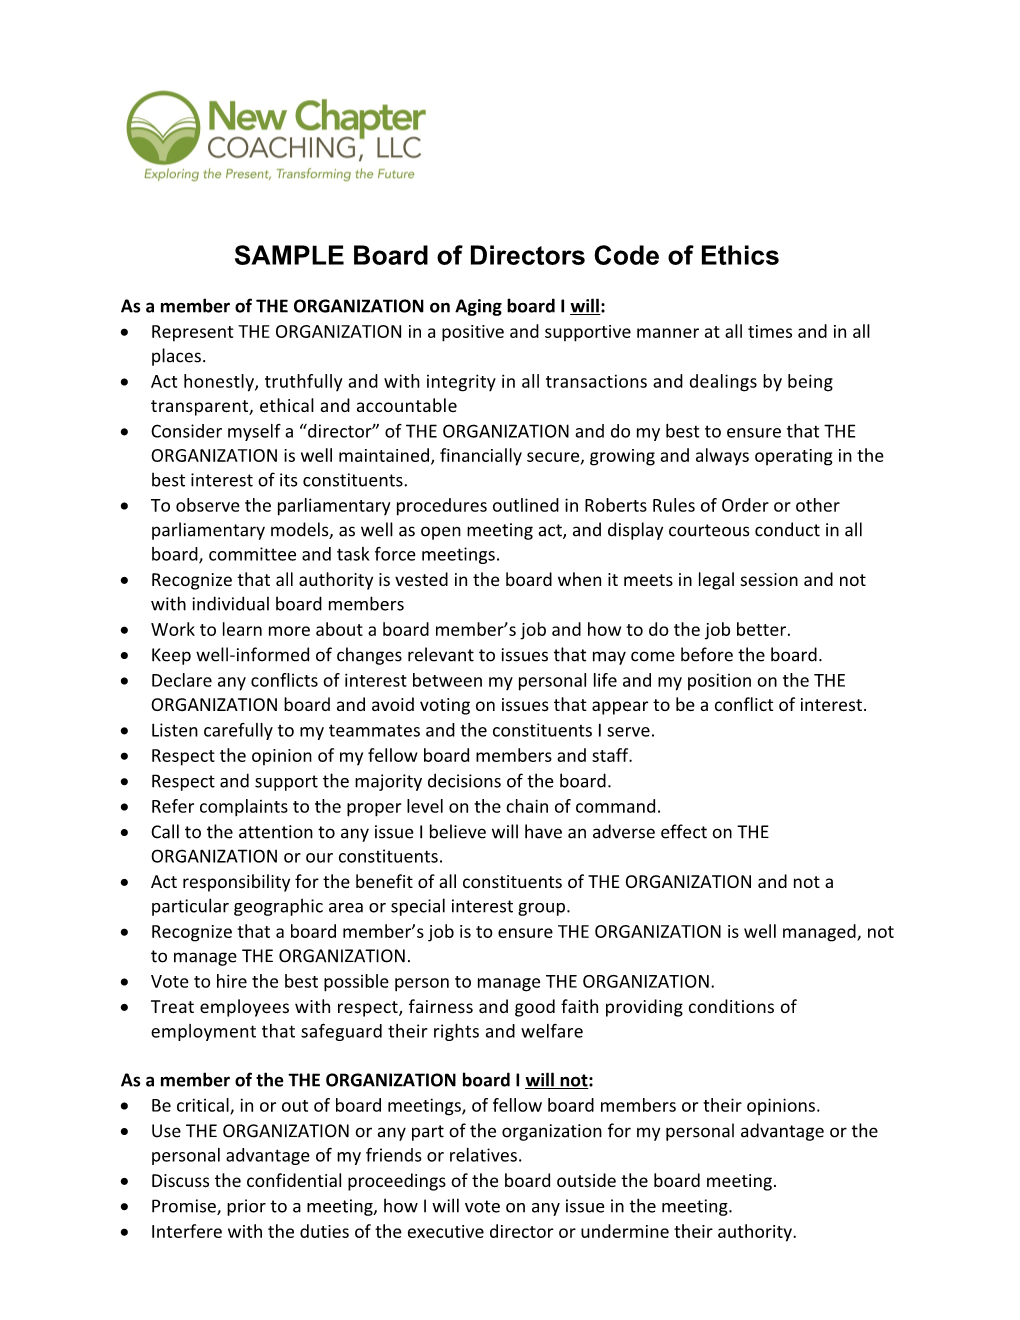 SAMPLE Board of Directorscode of Ethics